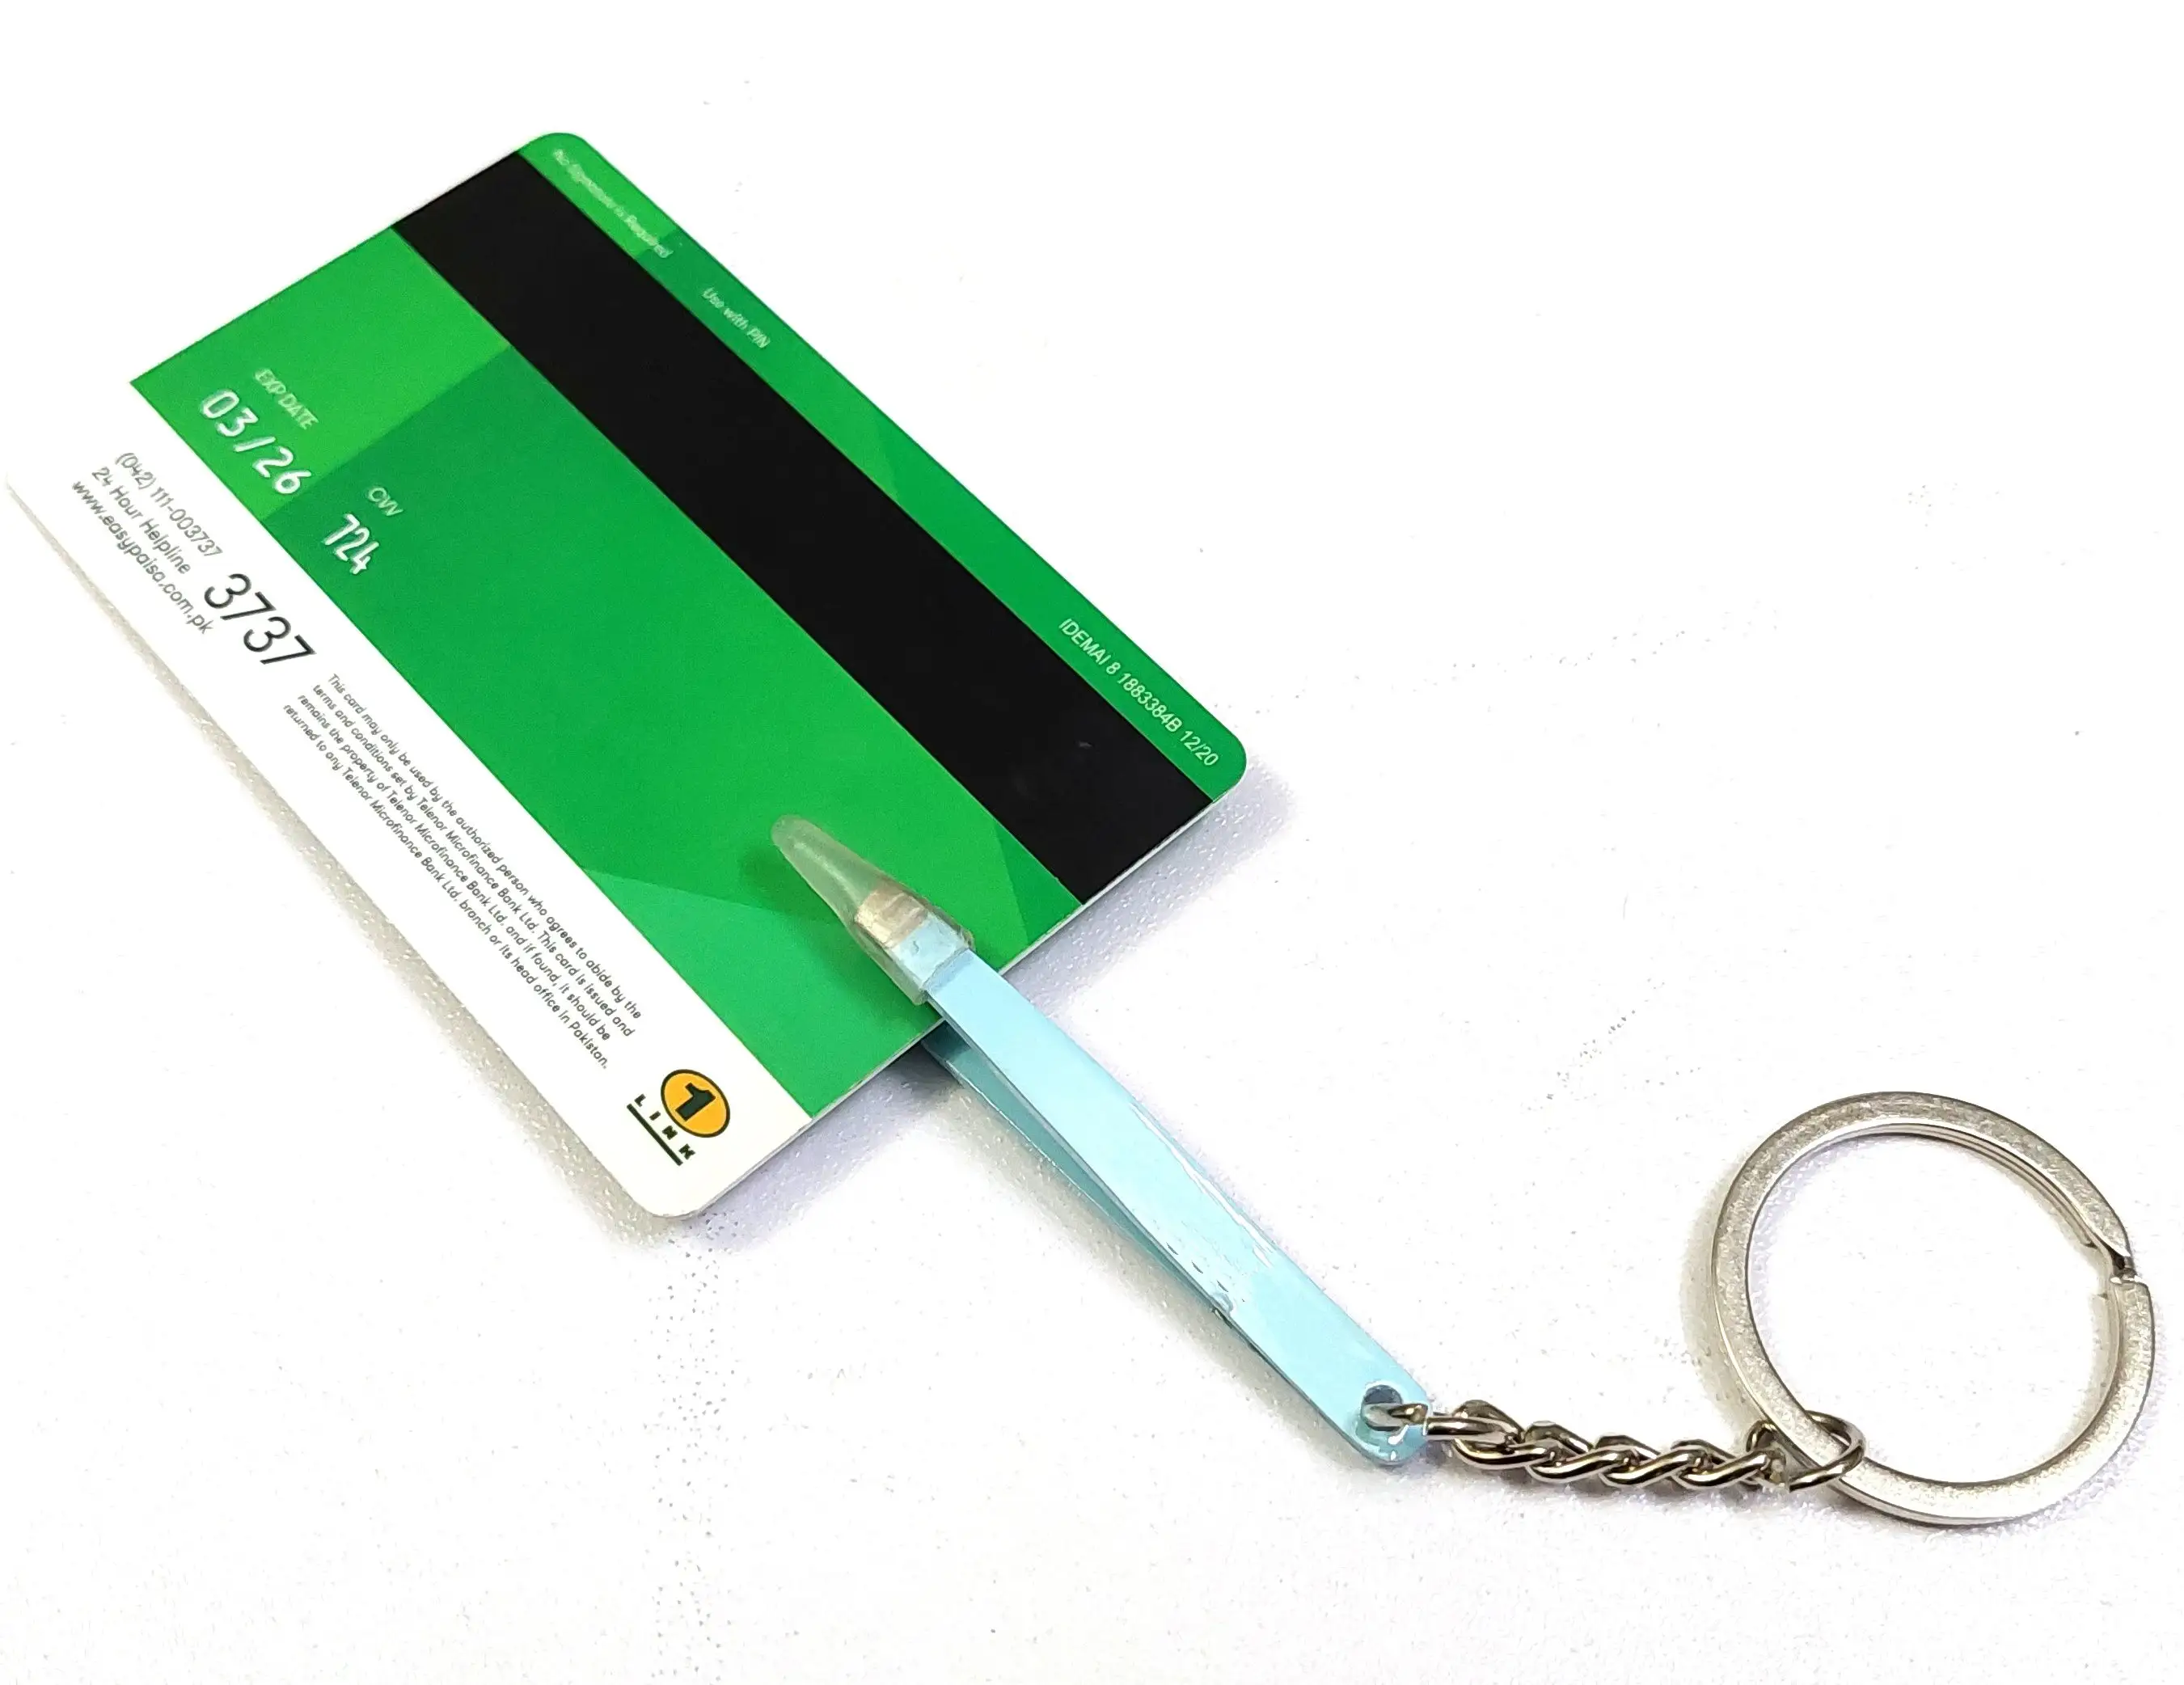 डेबिट कार्ड क्लिप क्रेडिट कार्ड धारक एटीएम गैस पंप लंबे नाखून प्यारा लंबे नाखून के लिए क्रेडिट कार्ड धरनेवाला ग्रिपर चाबी का गुच्छा रबर पकड़